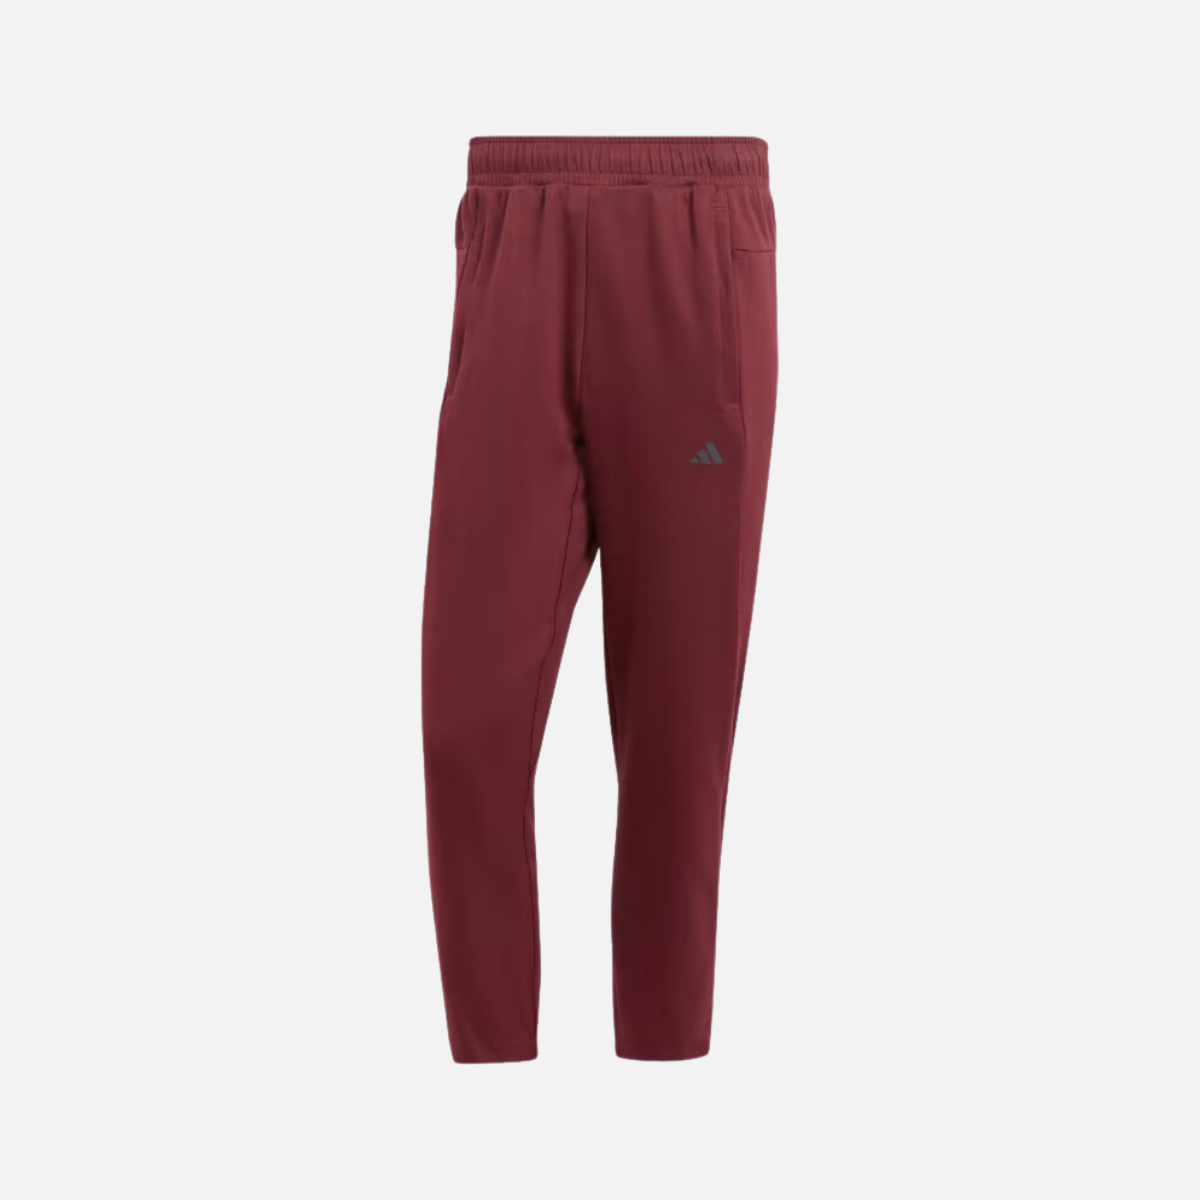 Adidas 7/8 Yoga & Training Men's Pant -Shadow Red/Carbon